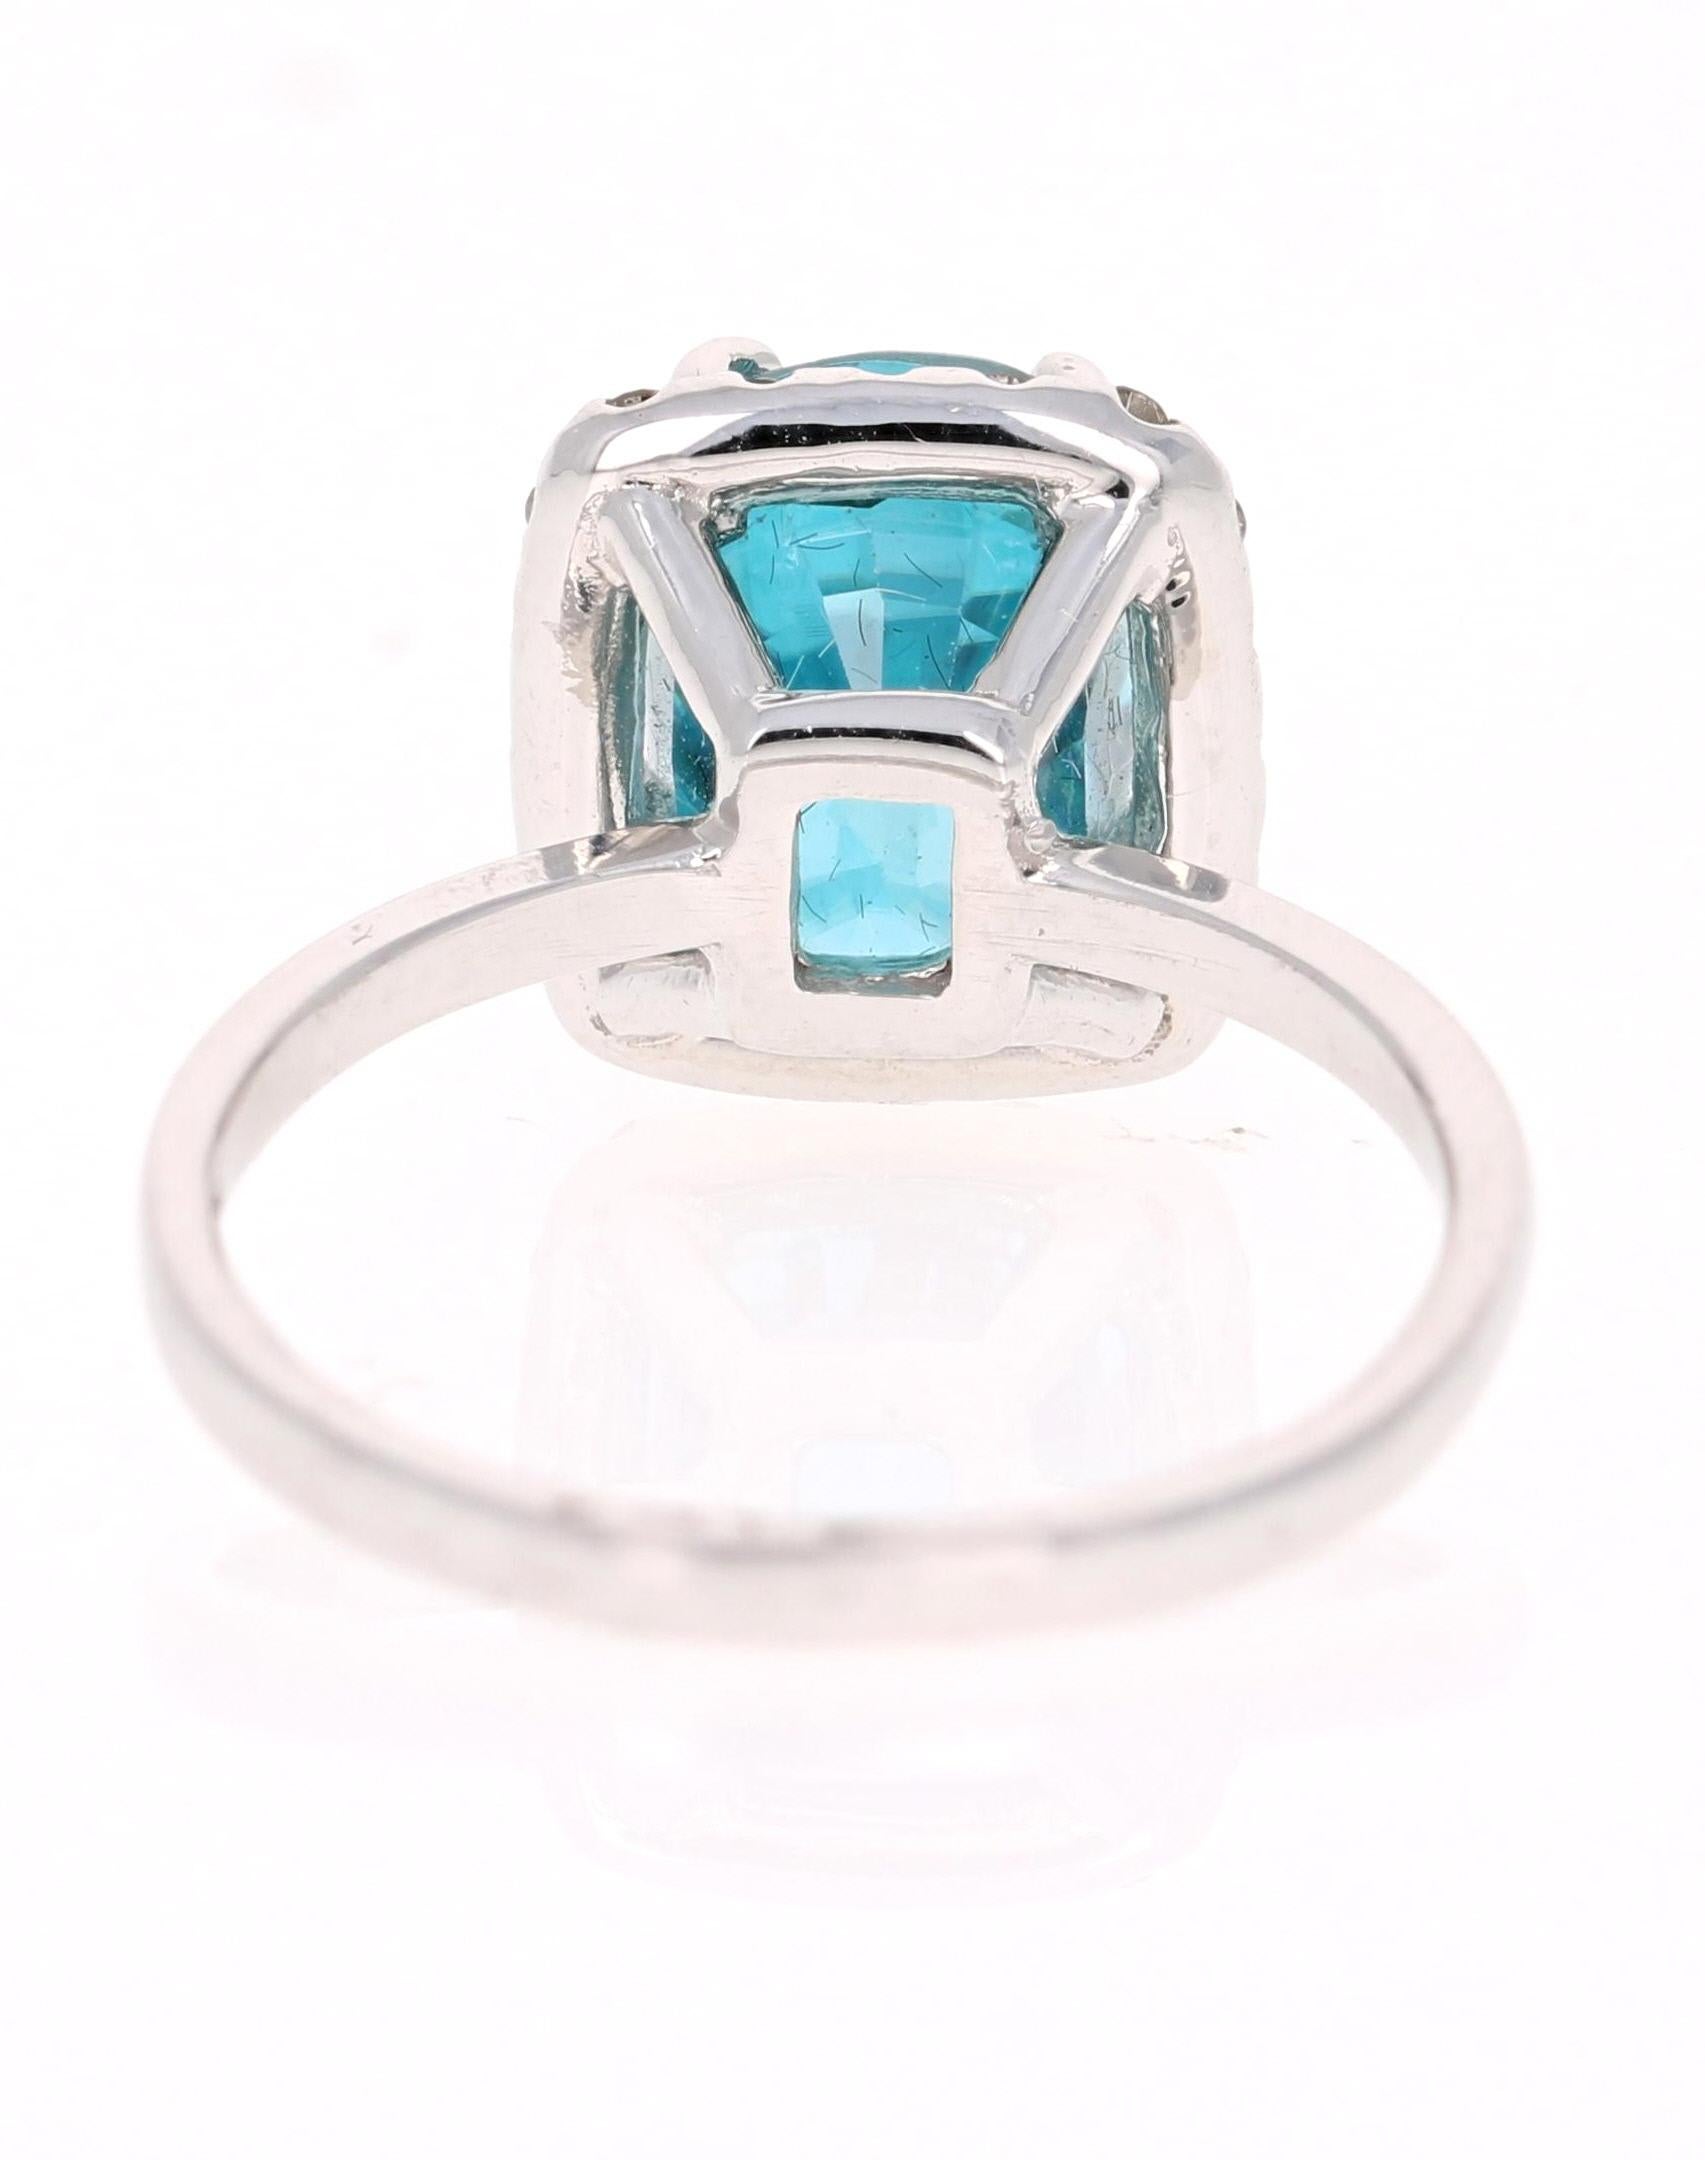 Oval Cut 6.46 Carat Blue Zircon Diamond 14 Karat White Gold Cocktail Ring For Sale